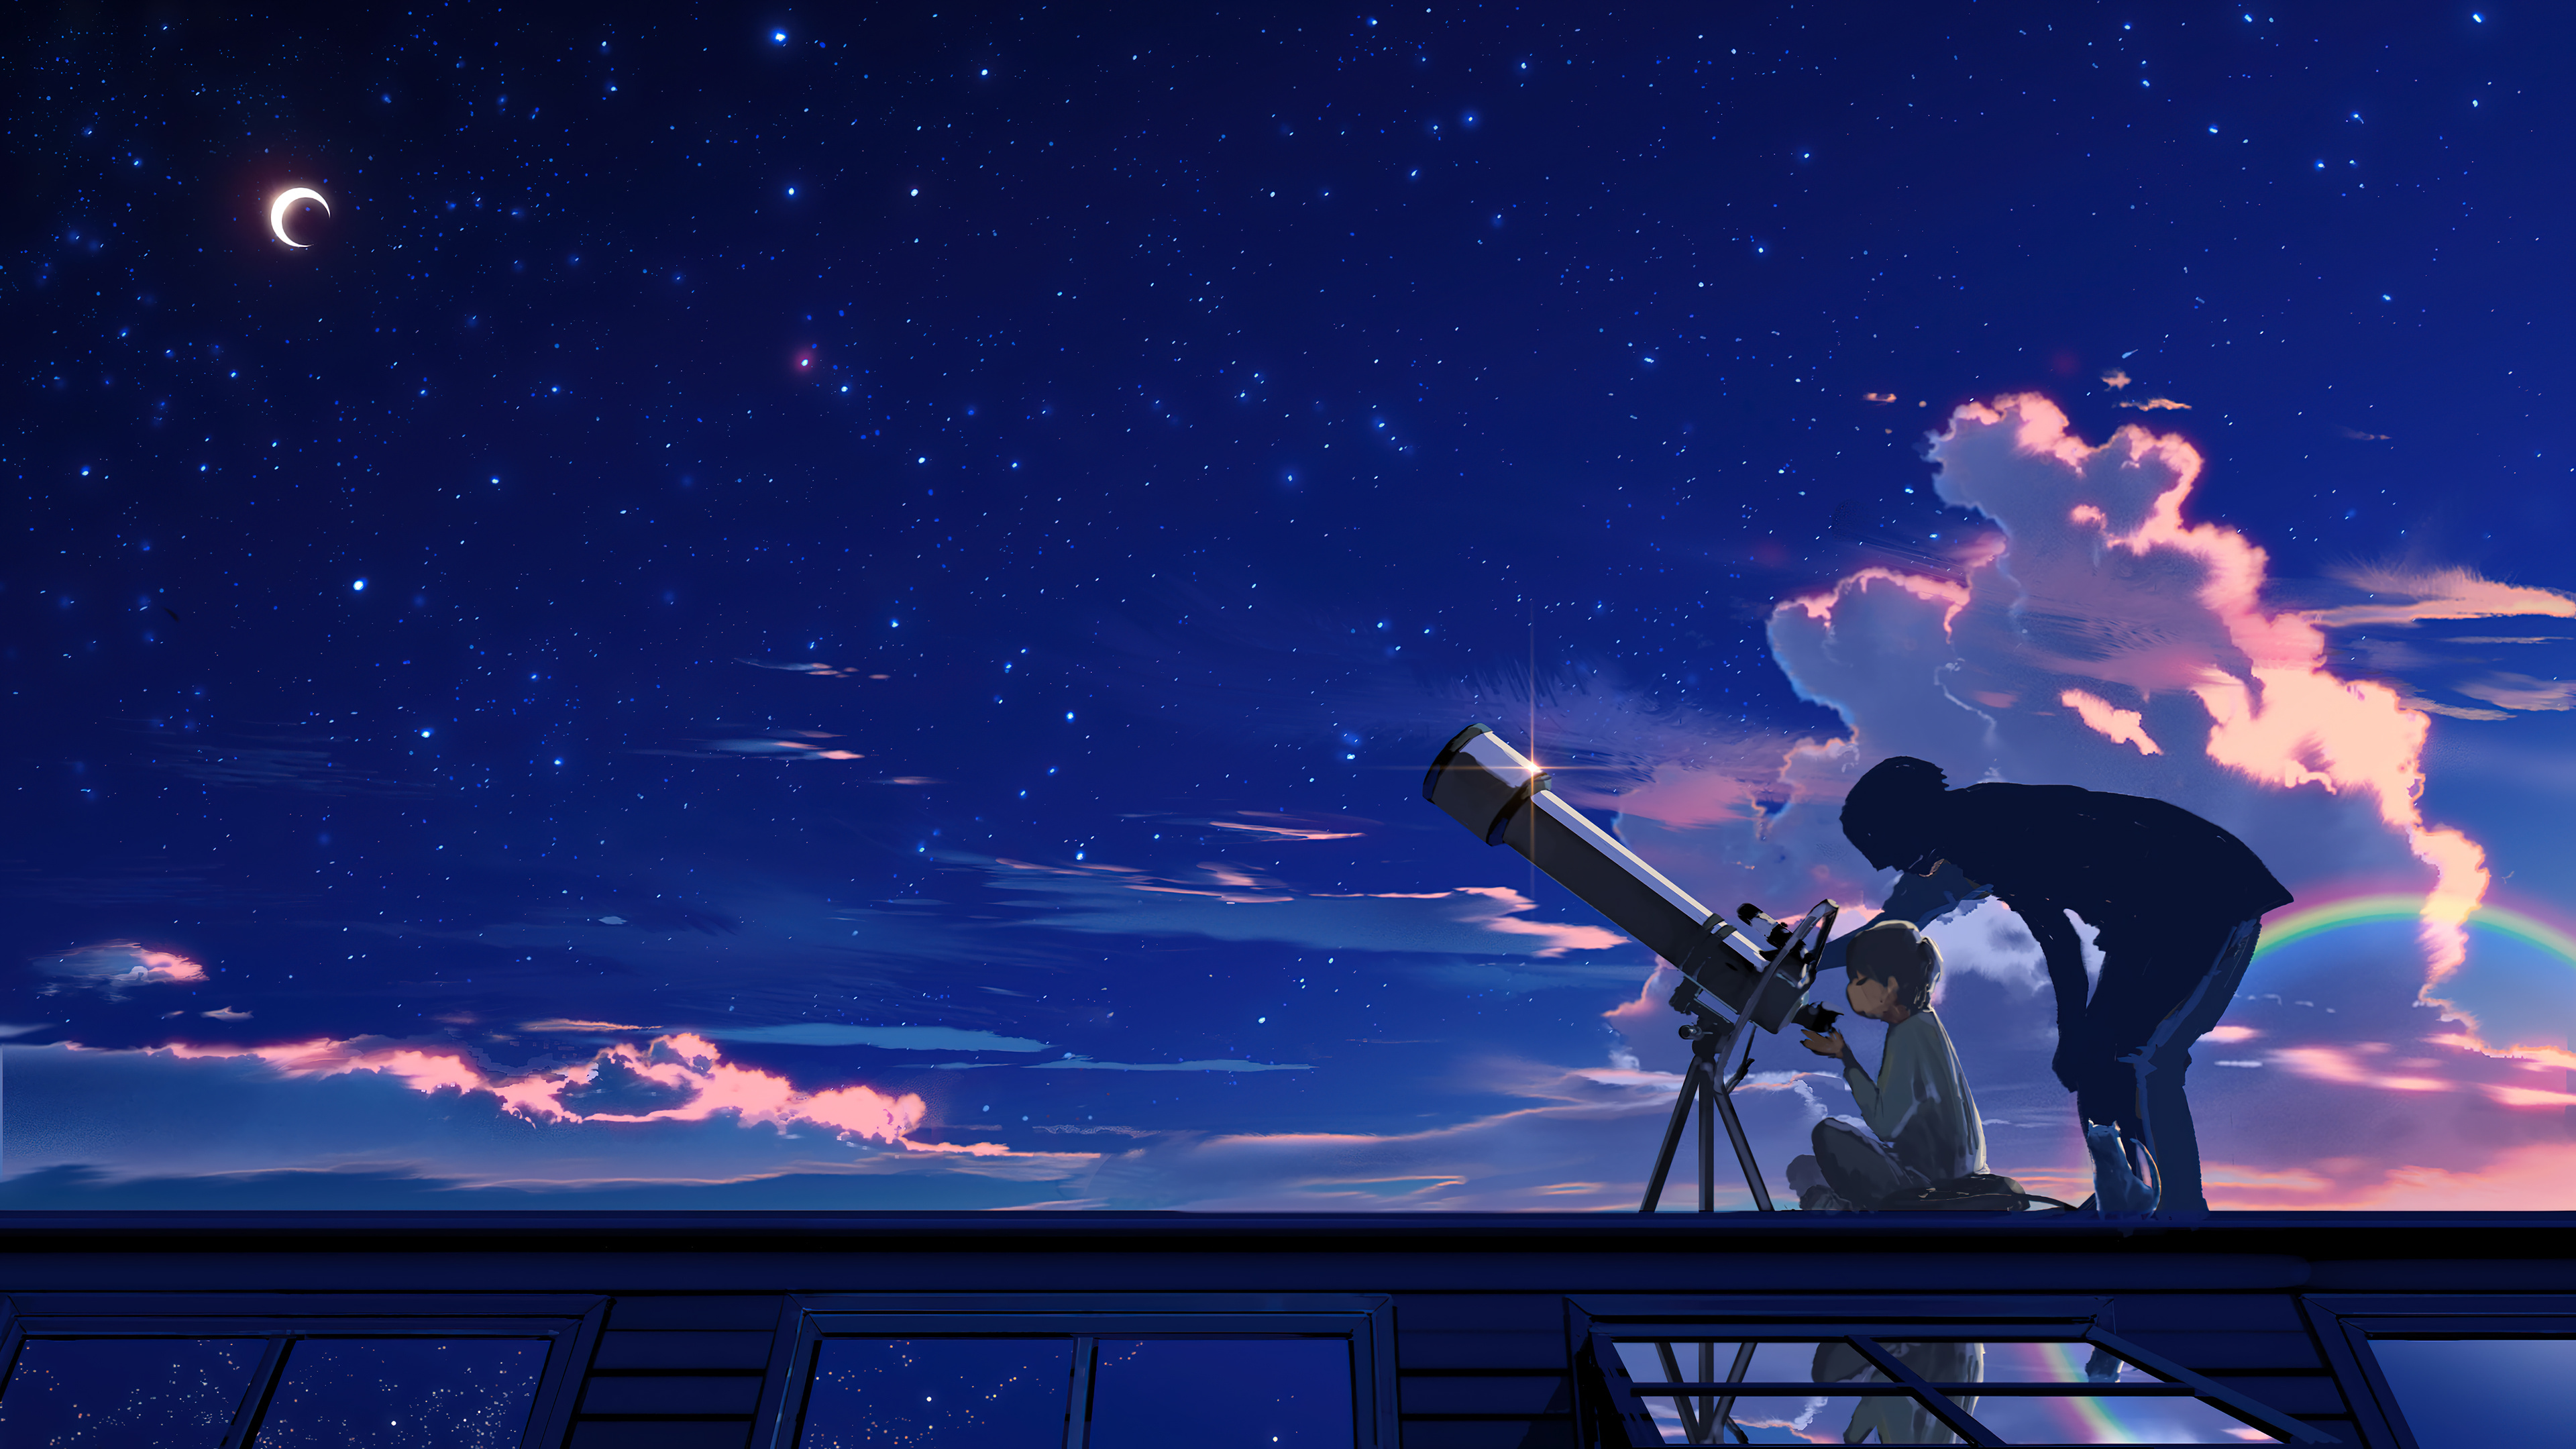 Stargazing Anime Night Stars Sky Scenery PC DeskK Wallpaper free Download